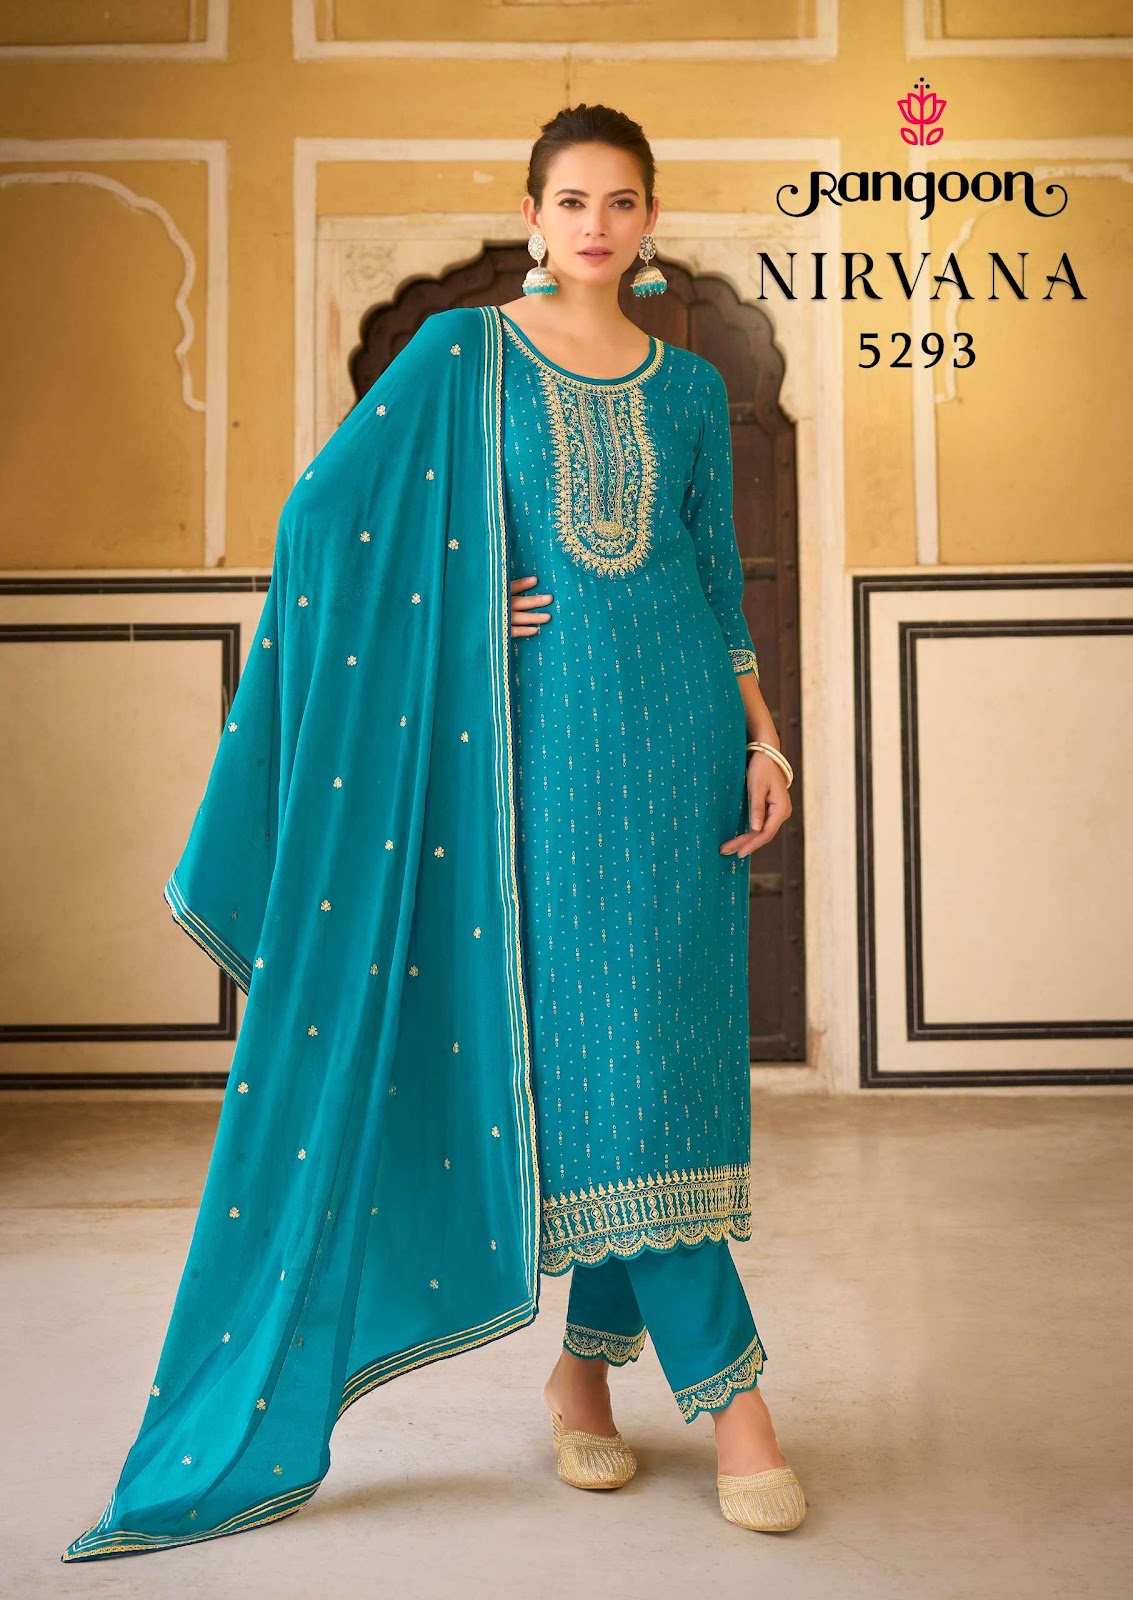 Nirvana Rangoon Rayon Readymade Pant Style Suits Supplier India